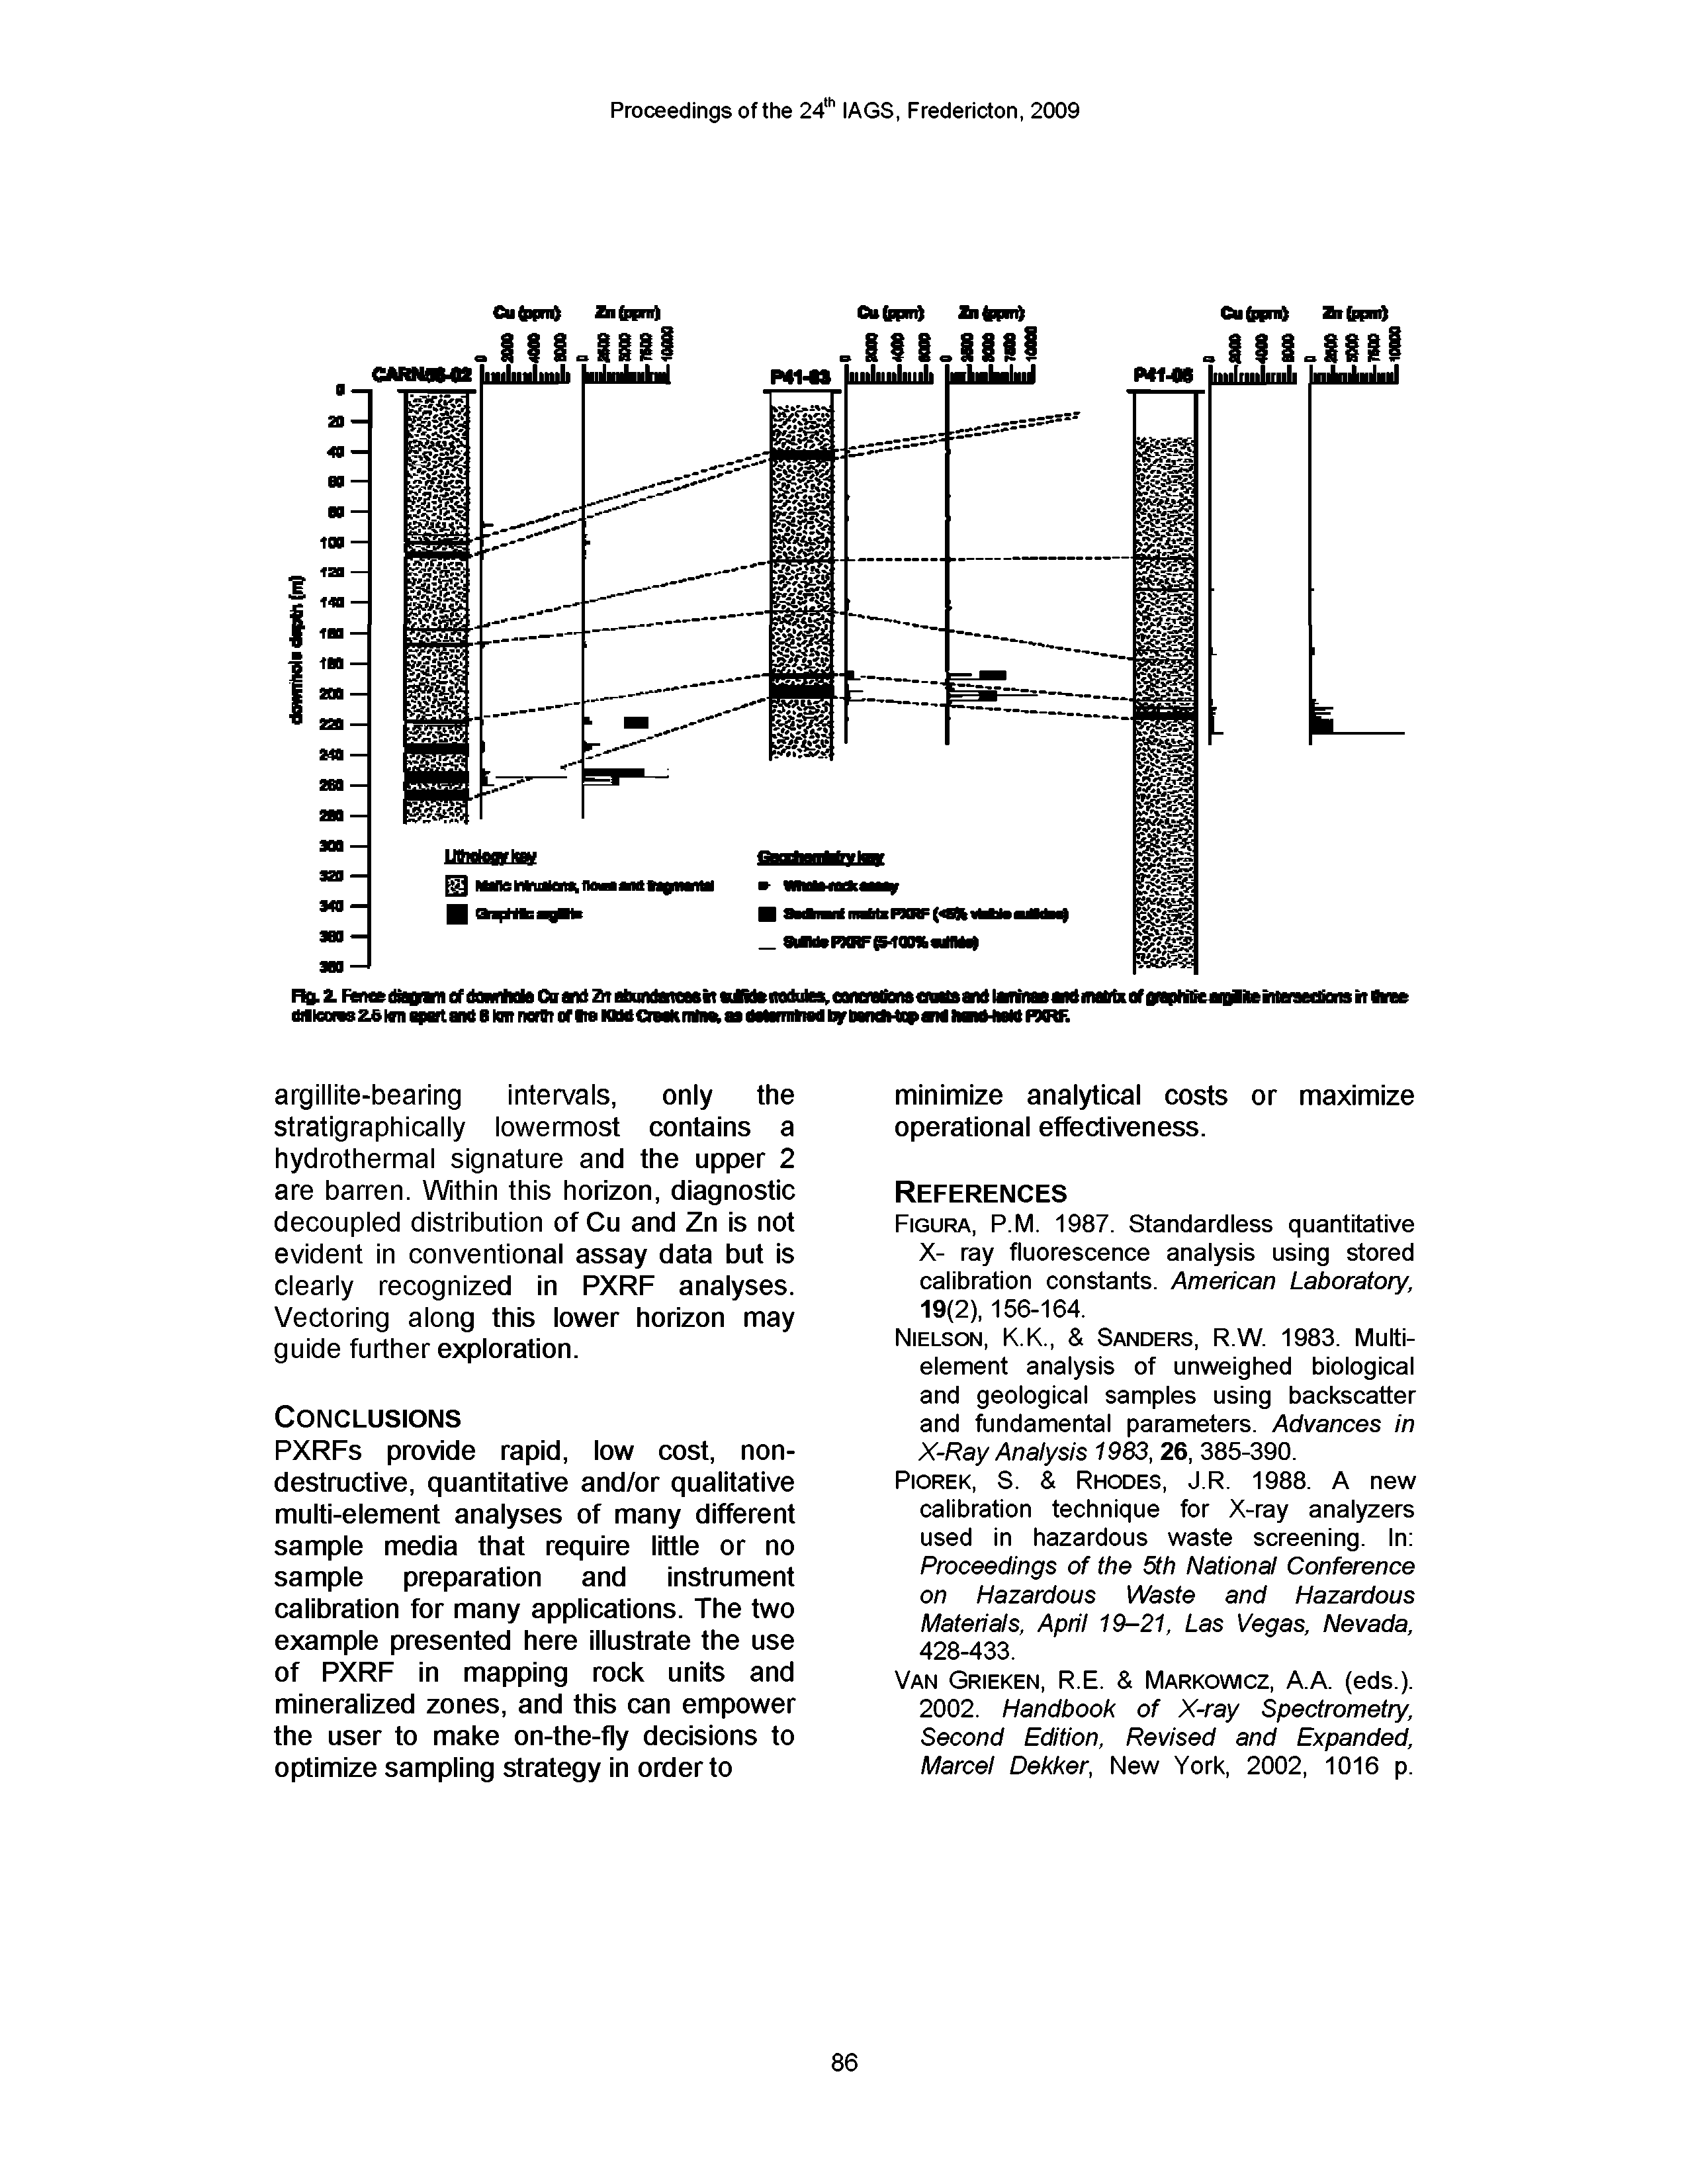 Figura, P.M. 1987. Standardless quantitative X- ray fluorescence analysis using stored calibration constants. American Laboratory, 19(2), 156-164.